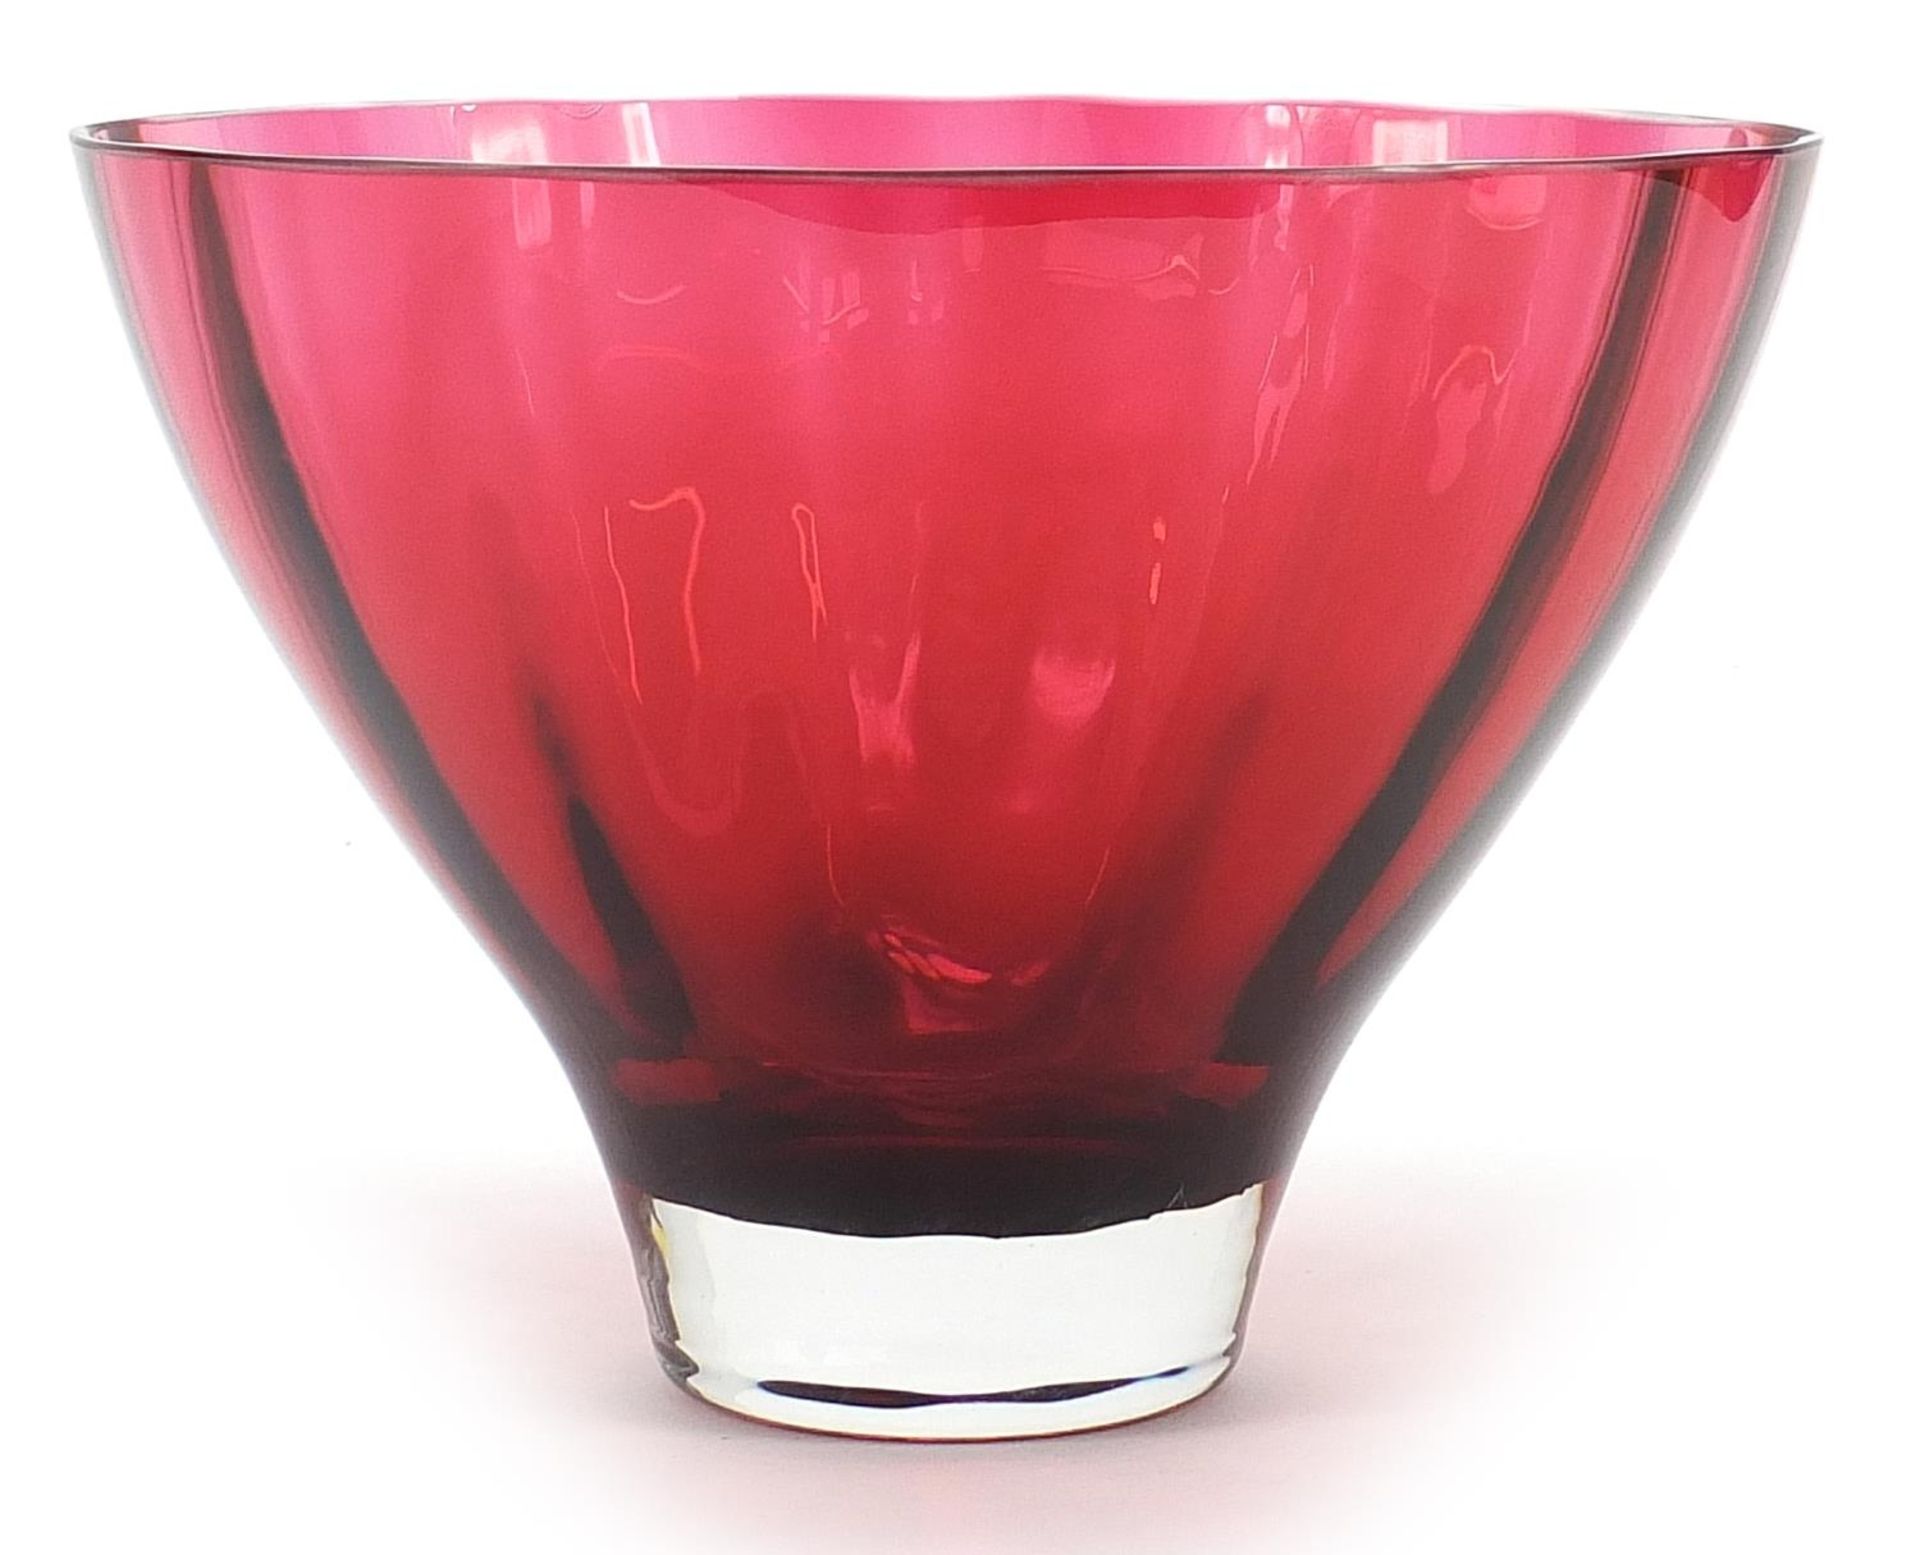 Dartington Crystal ruby glass bowl, 17cm high x 23.5cm in diameter - Image 2 of 4